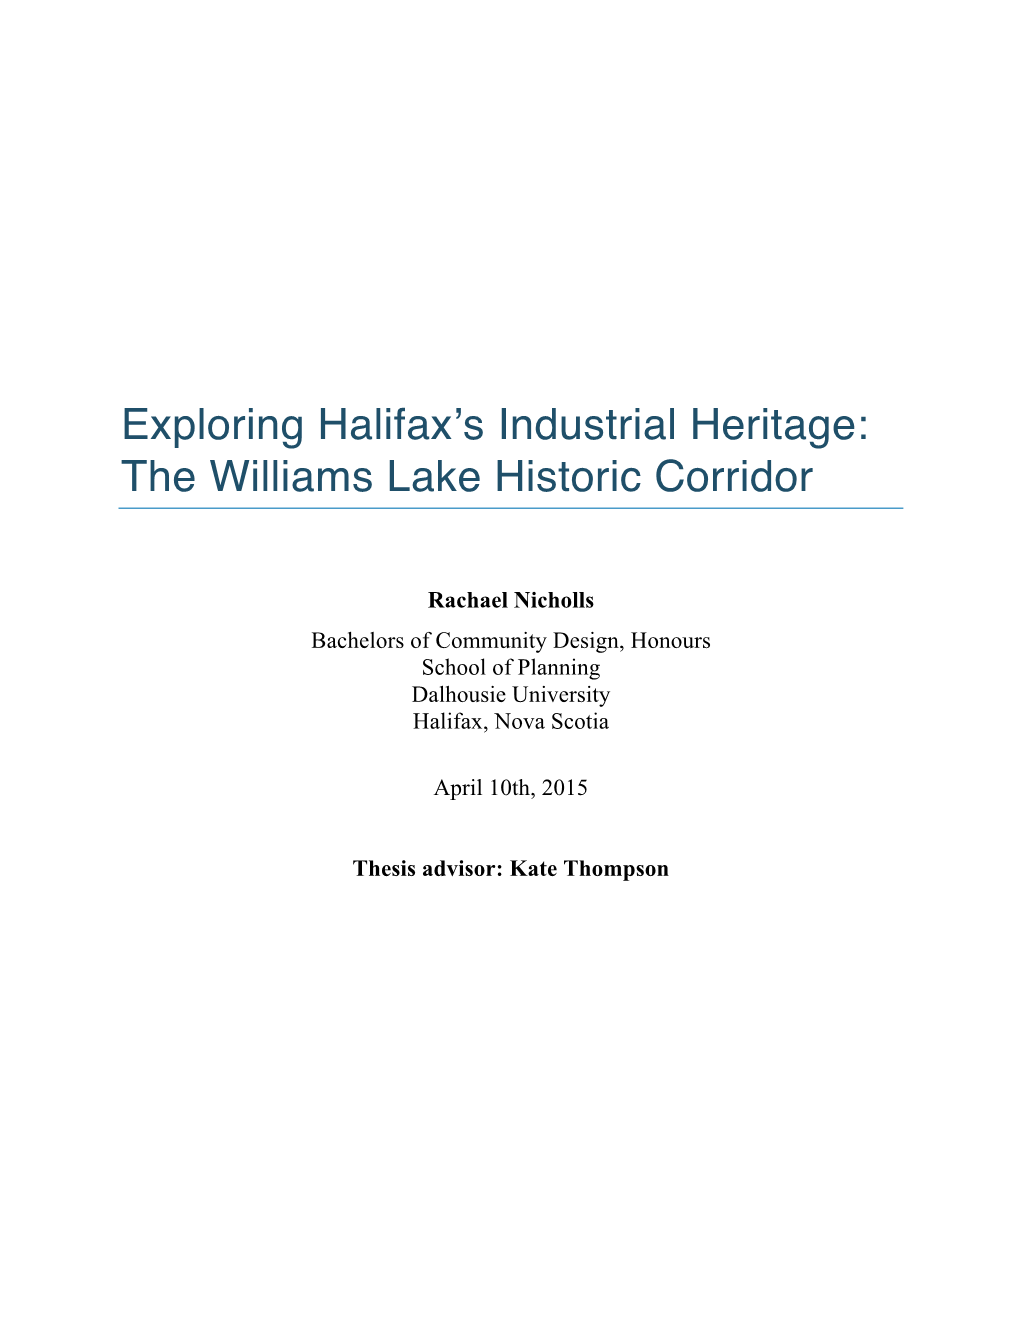 Exploring Halifax's Industrial Heritage: the Williams Lake